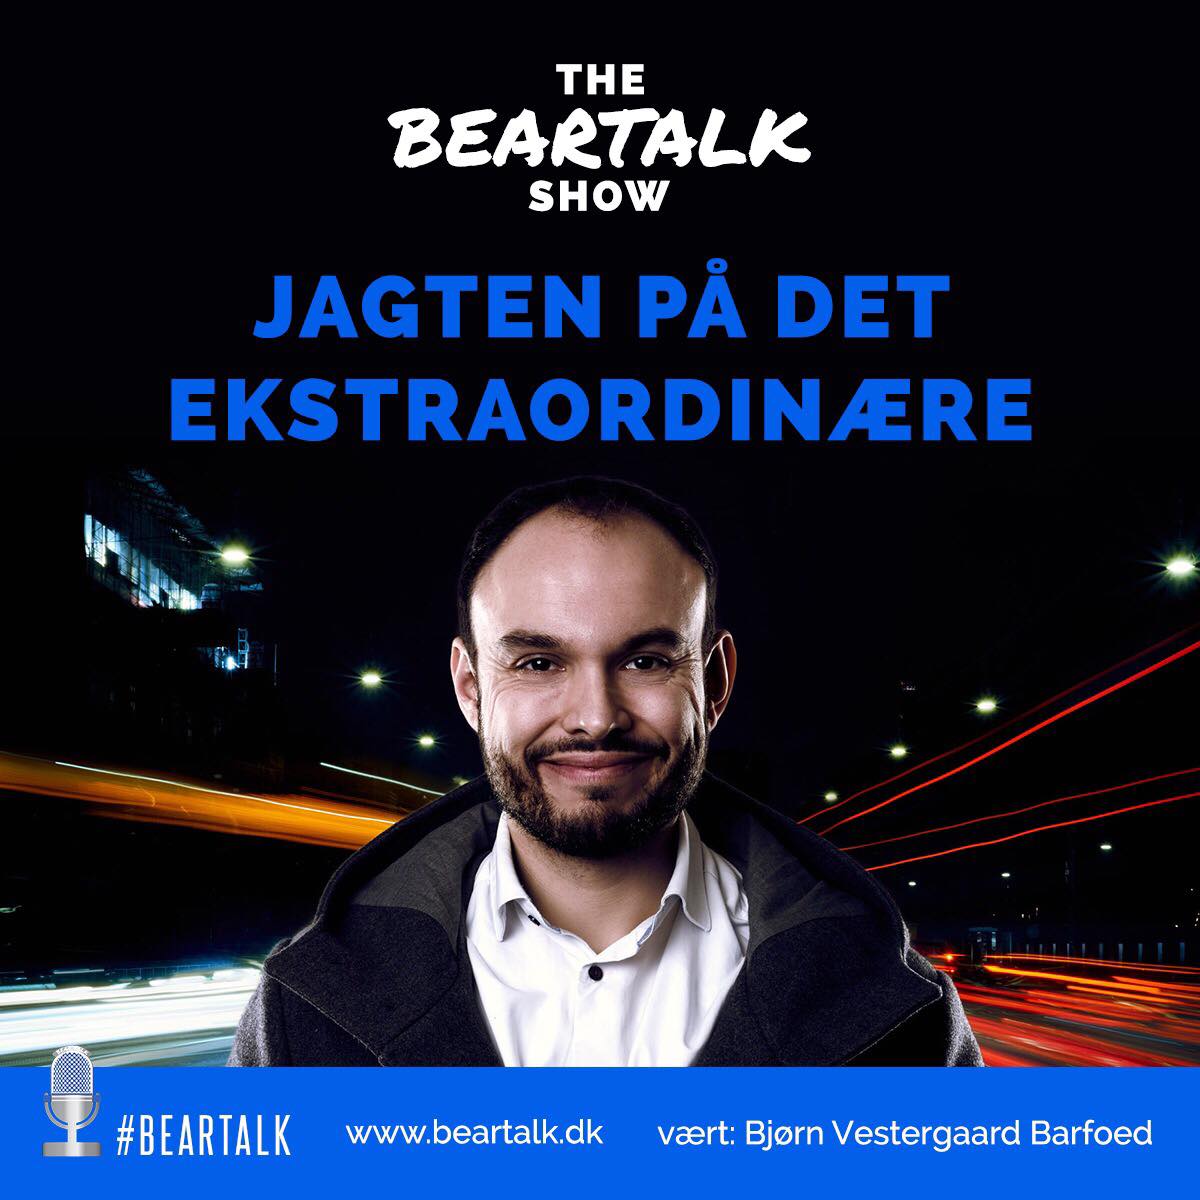 The Beartalk Show